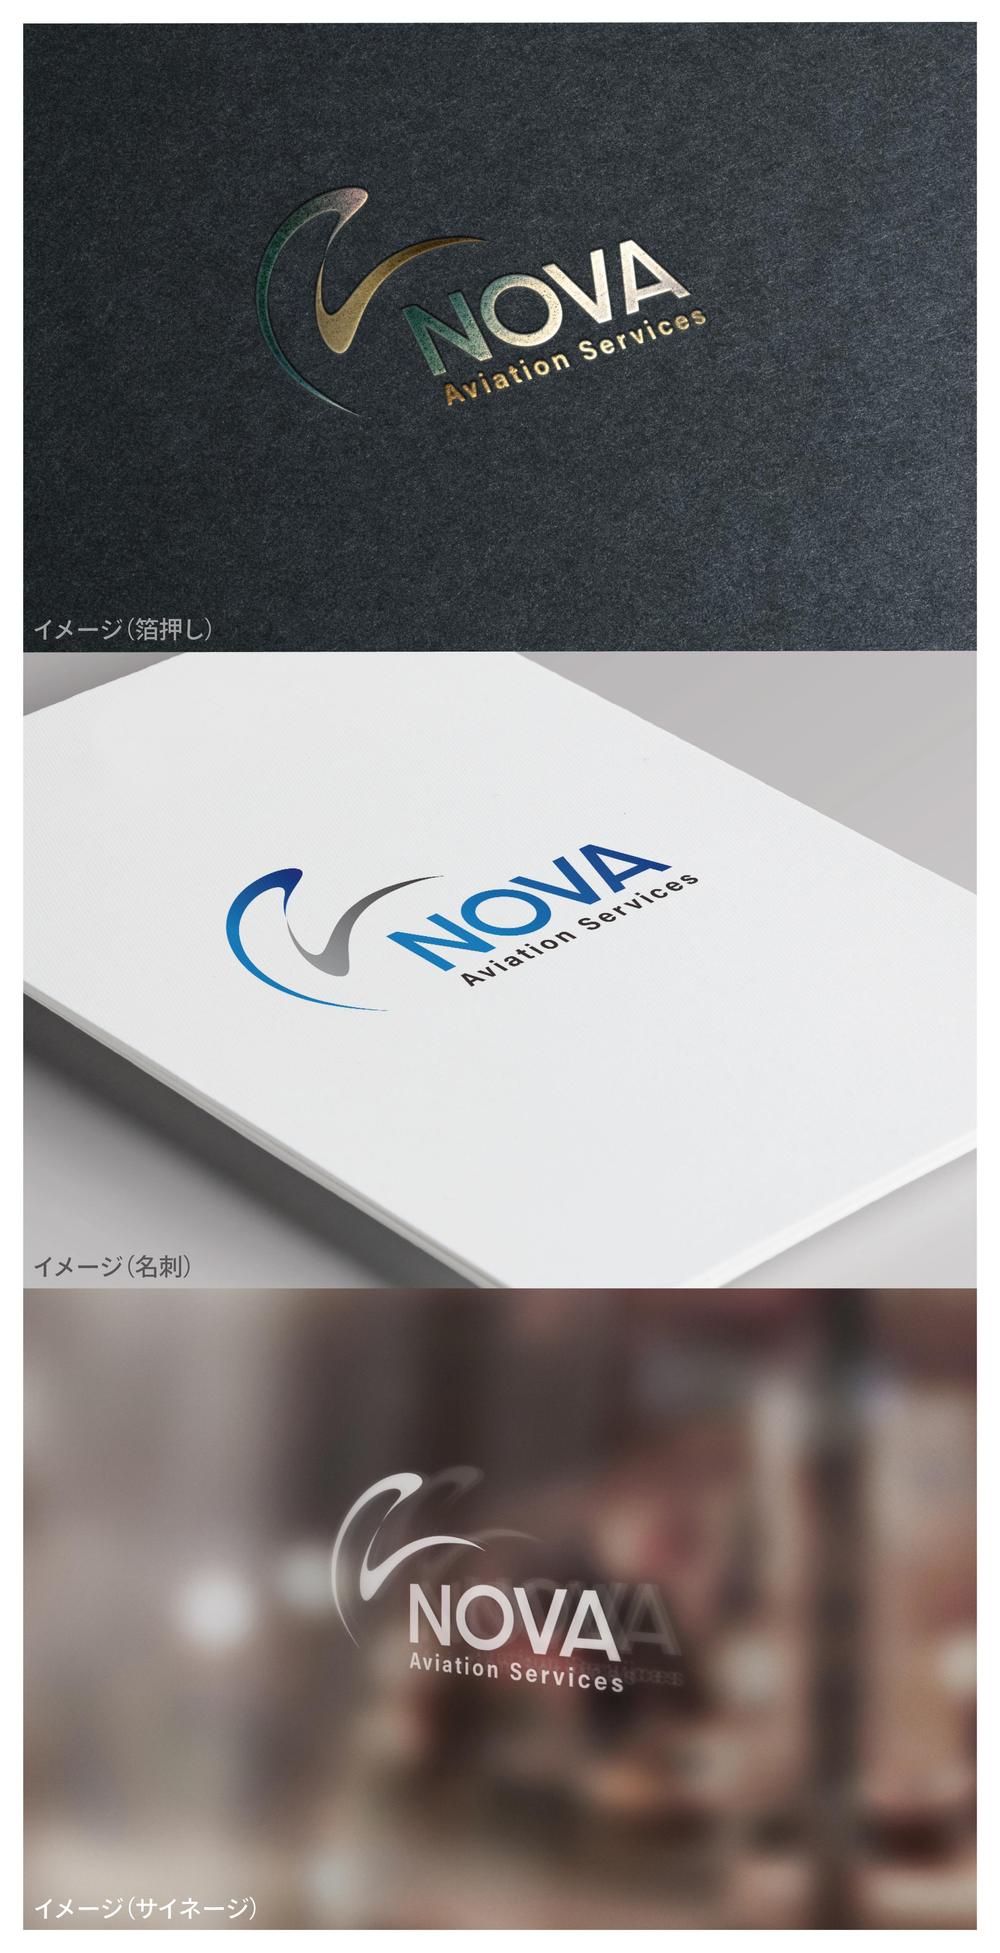 NOVA Aviation Services_logo02_01.jpg